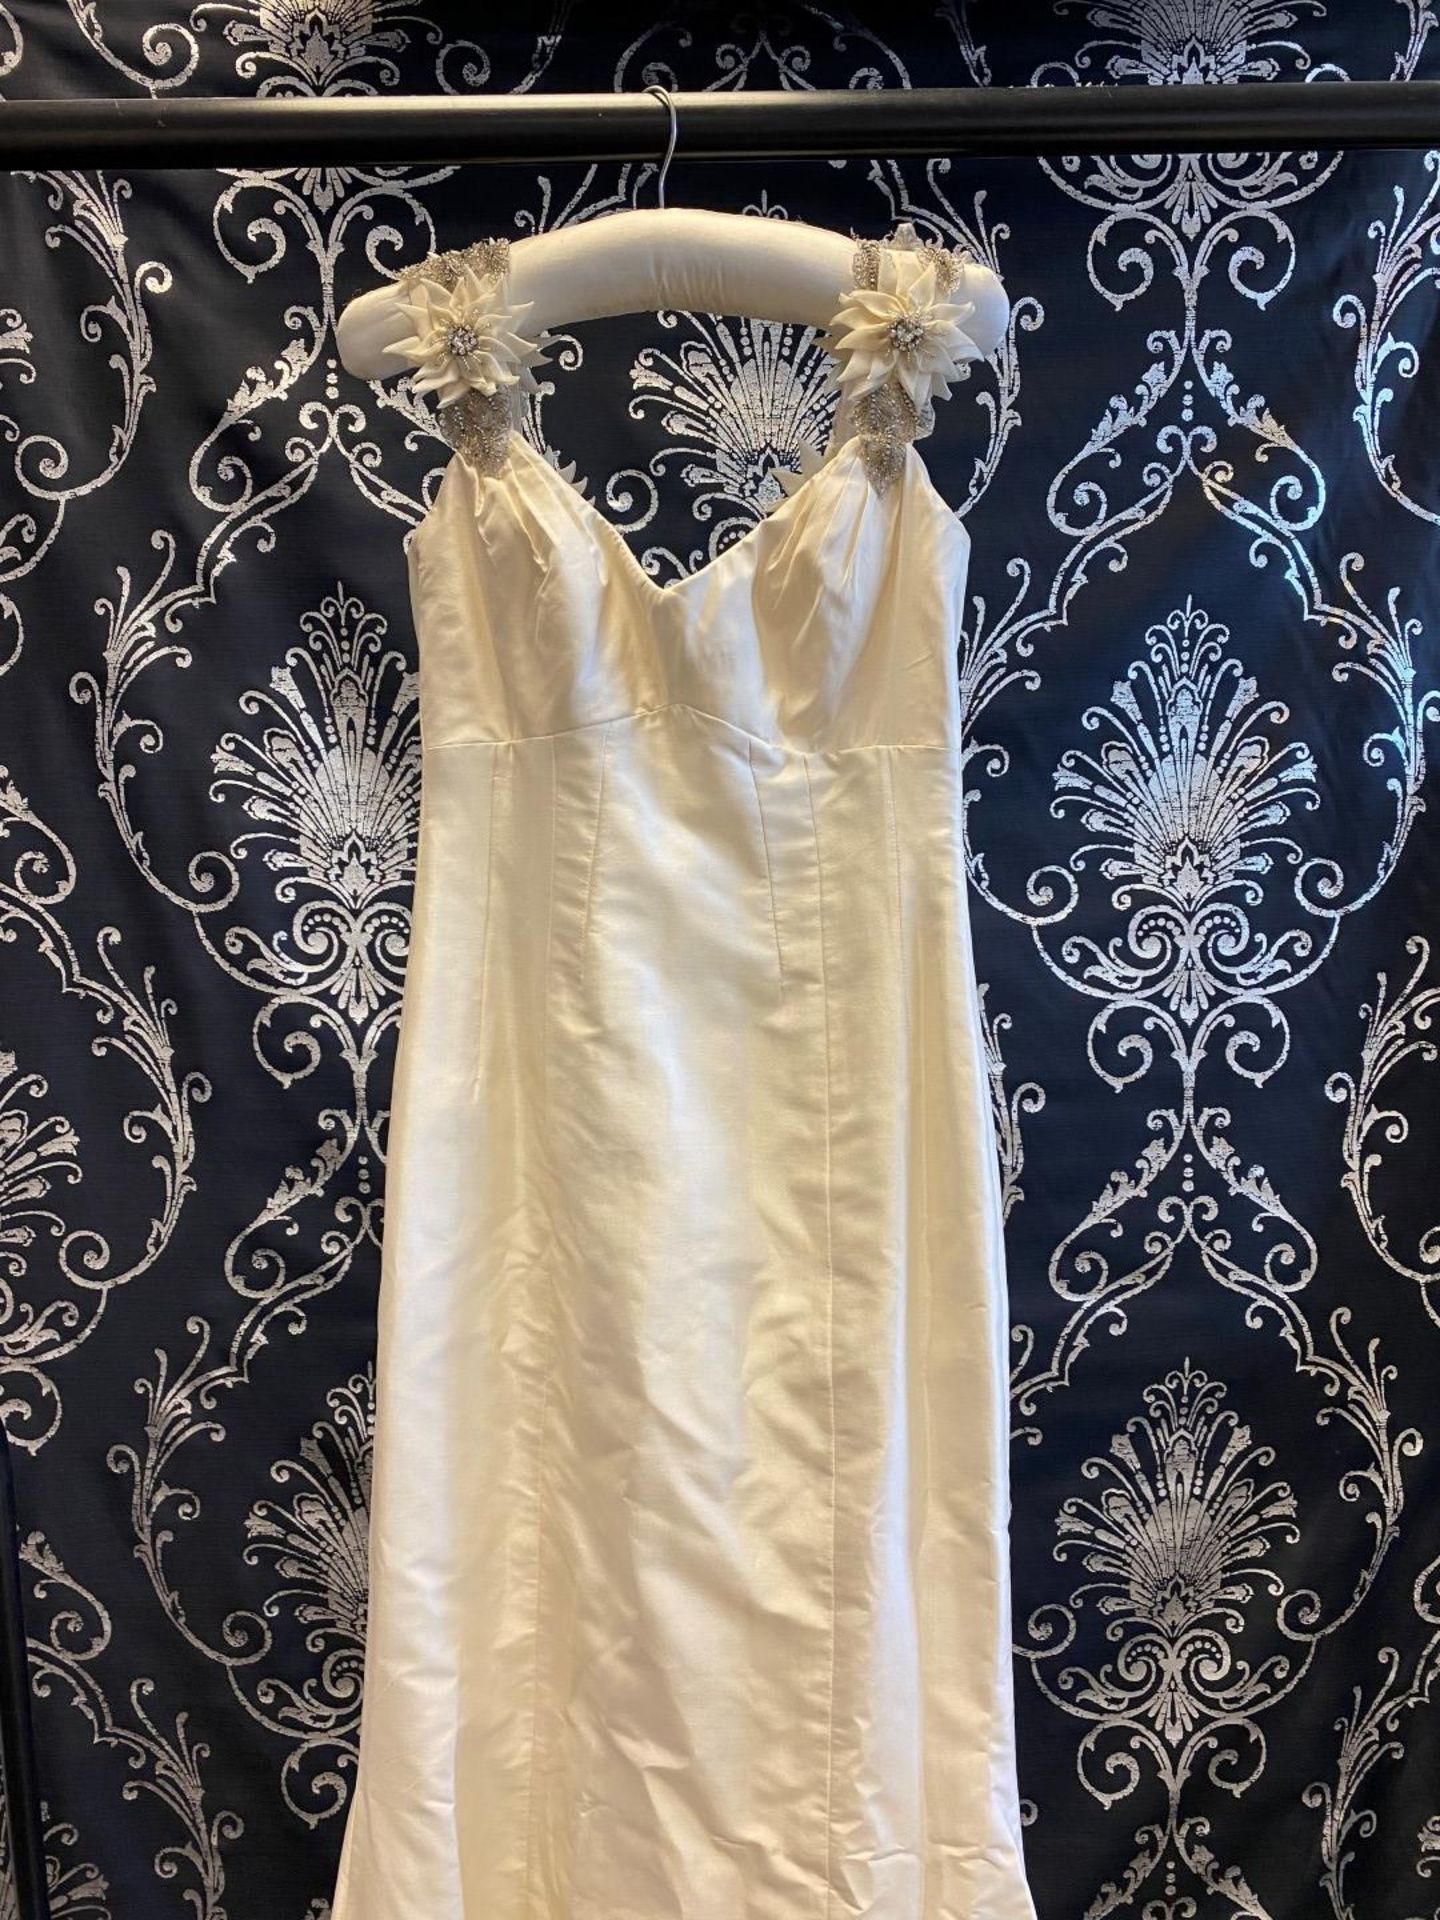 1 x ALAN HANNAH 'Electra' Stunning Fishtail Designer Wedding Dress RRP £2,330 UK 12 - Image 3 of 11